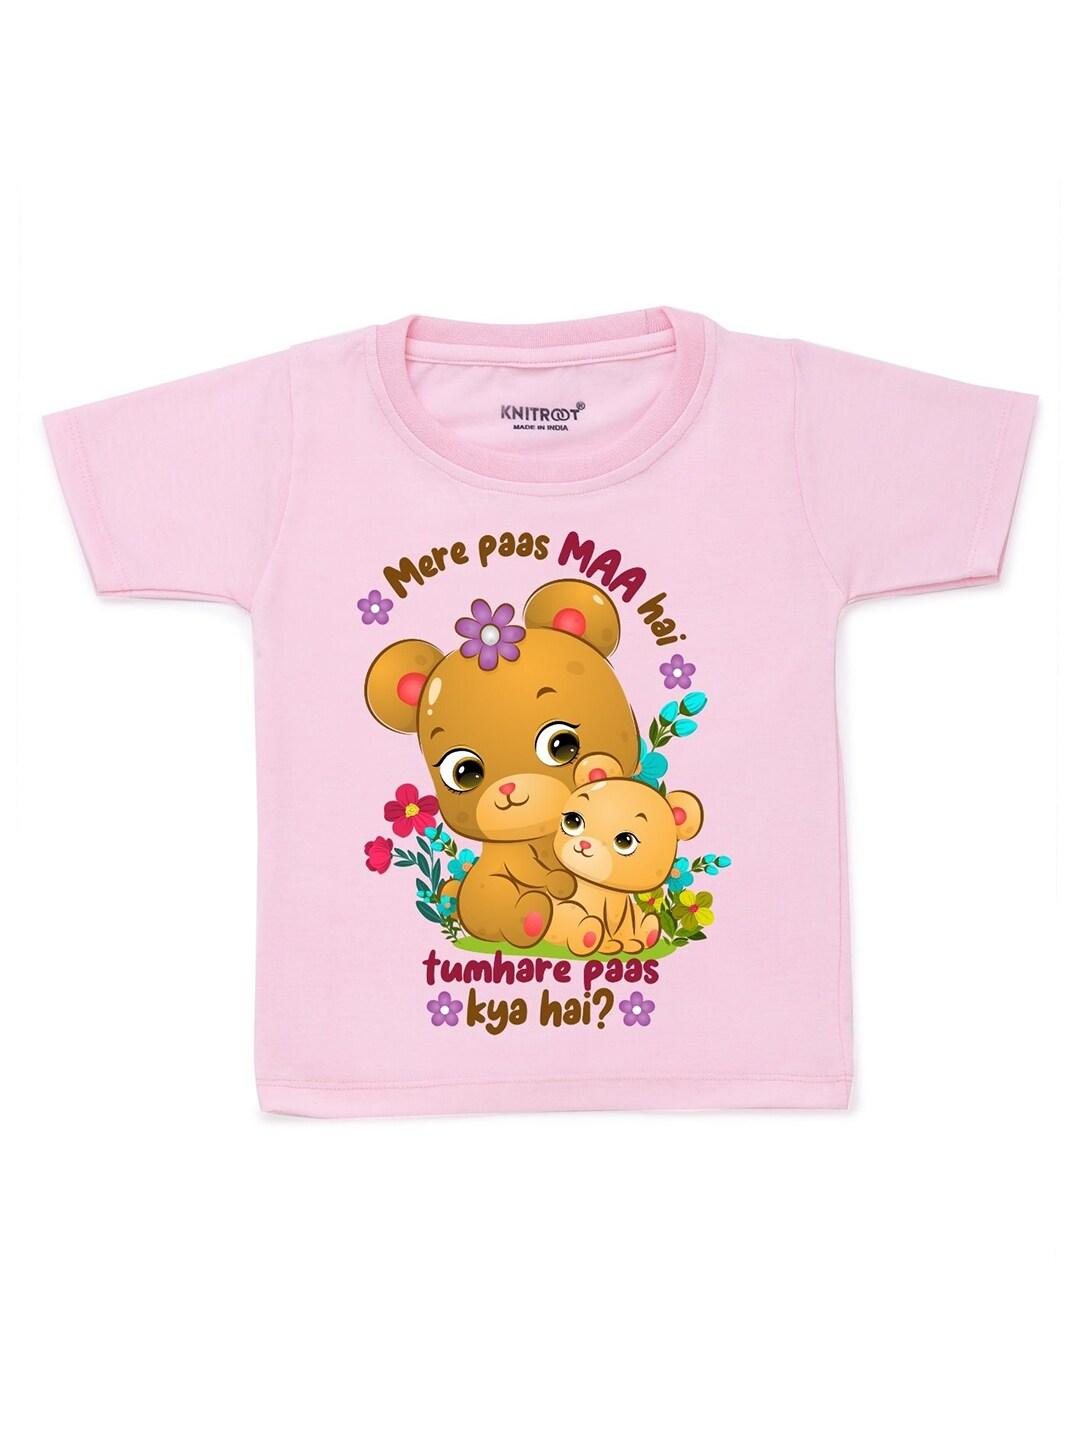 knitroot unisex kids pink graphic printed t-shirt